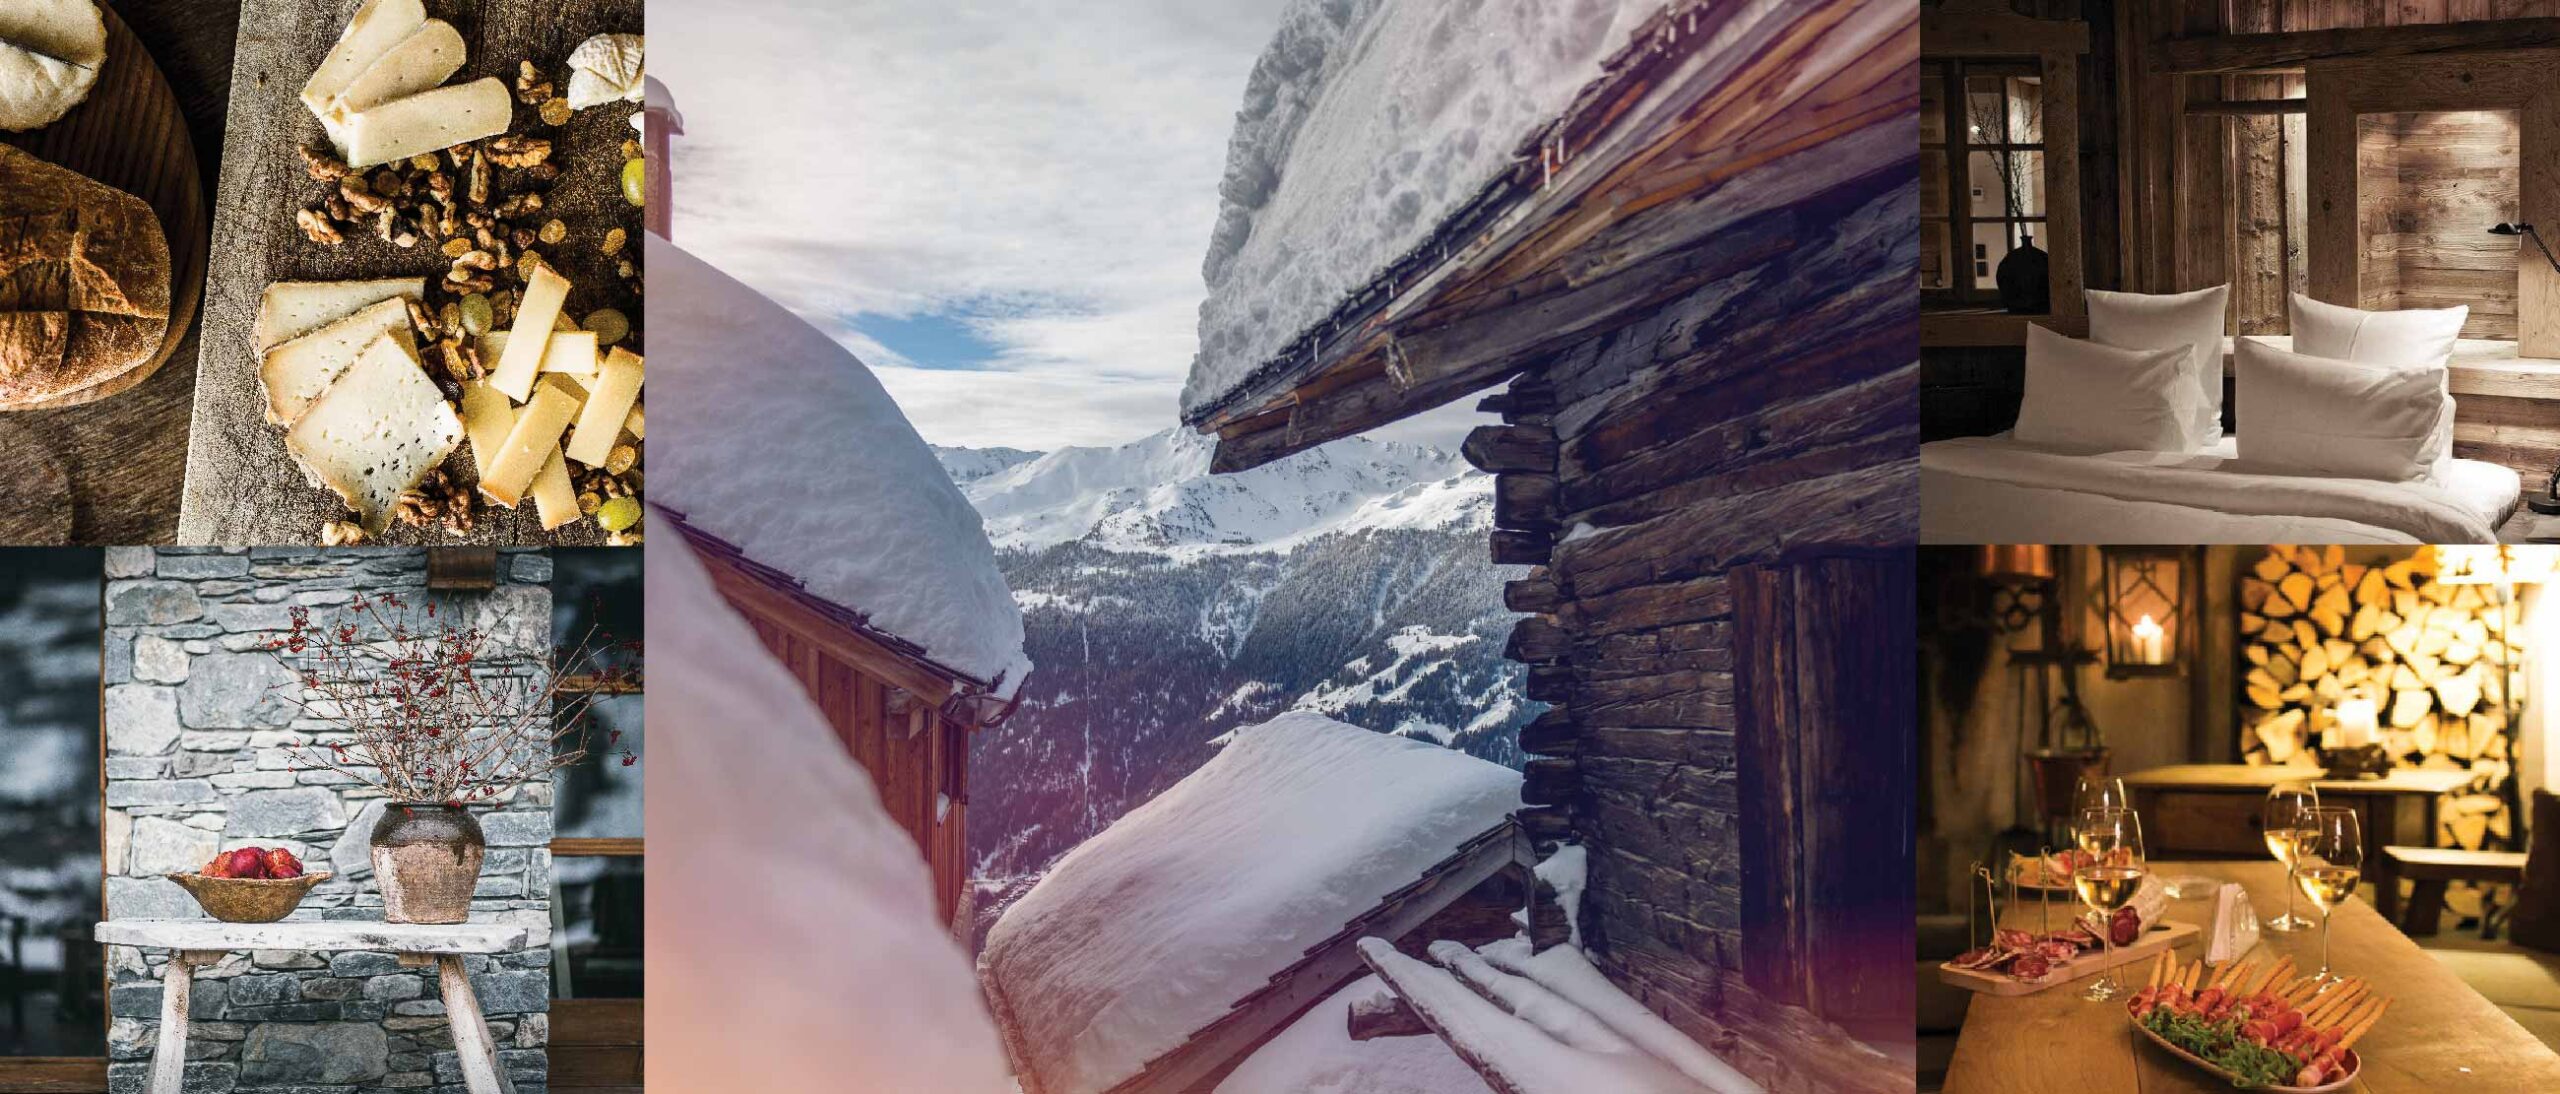 Luxury-ski-safaris-&-Alpine-HIking-vacations-in-Europe-Swisskisafari